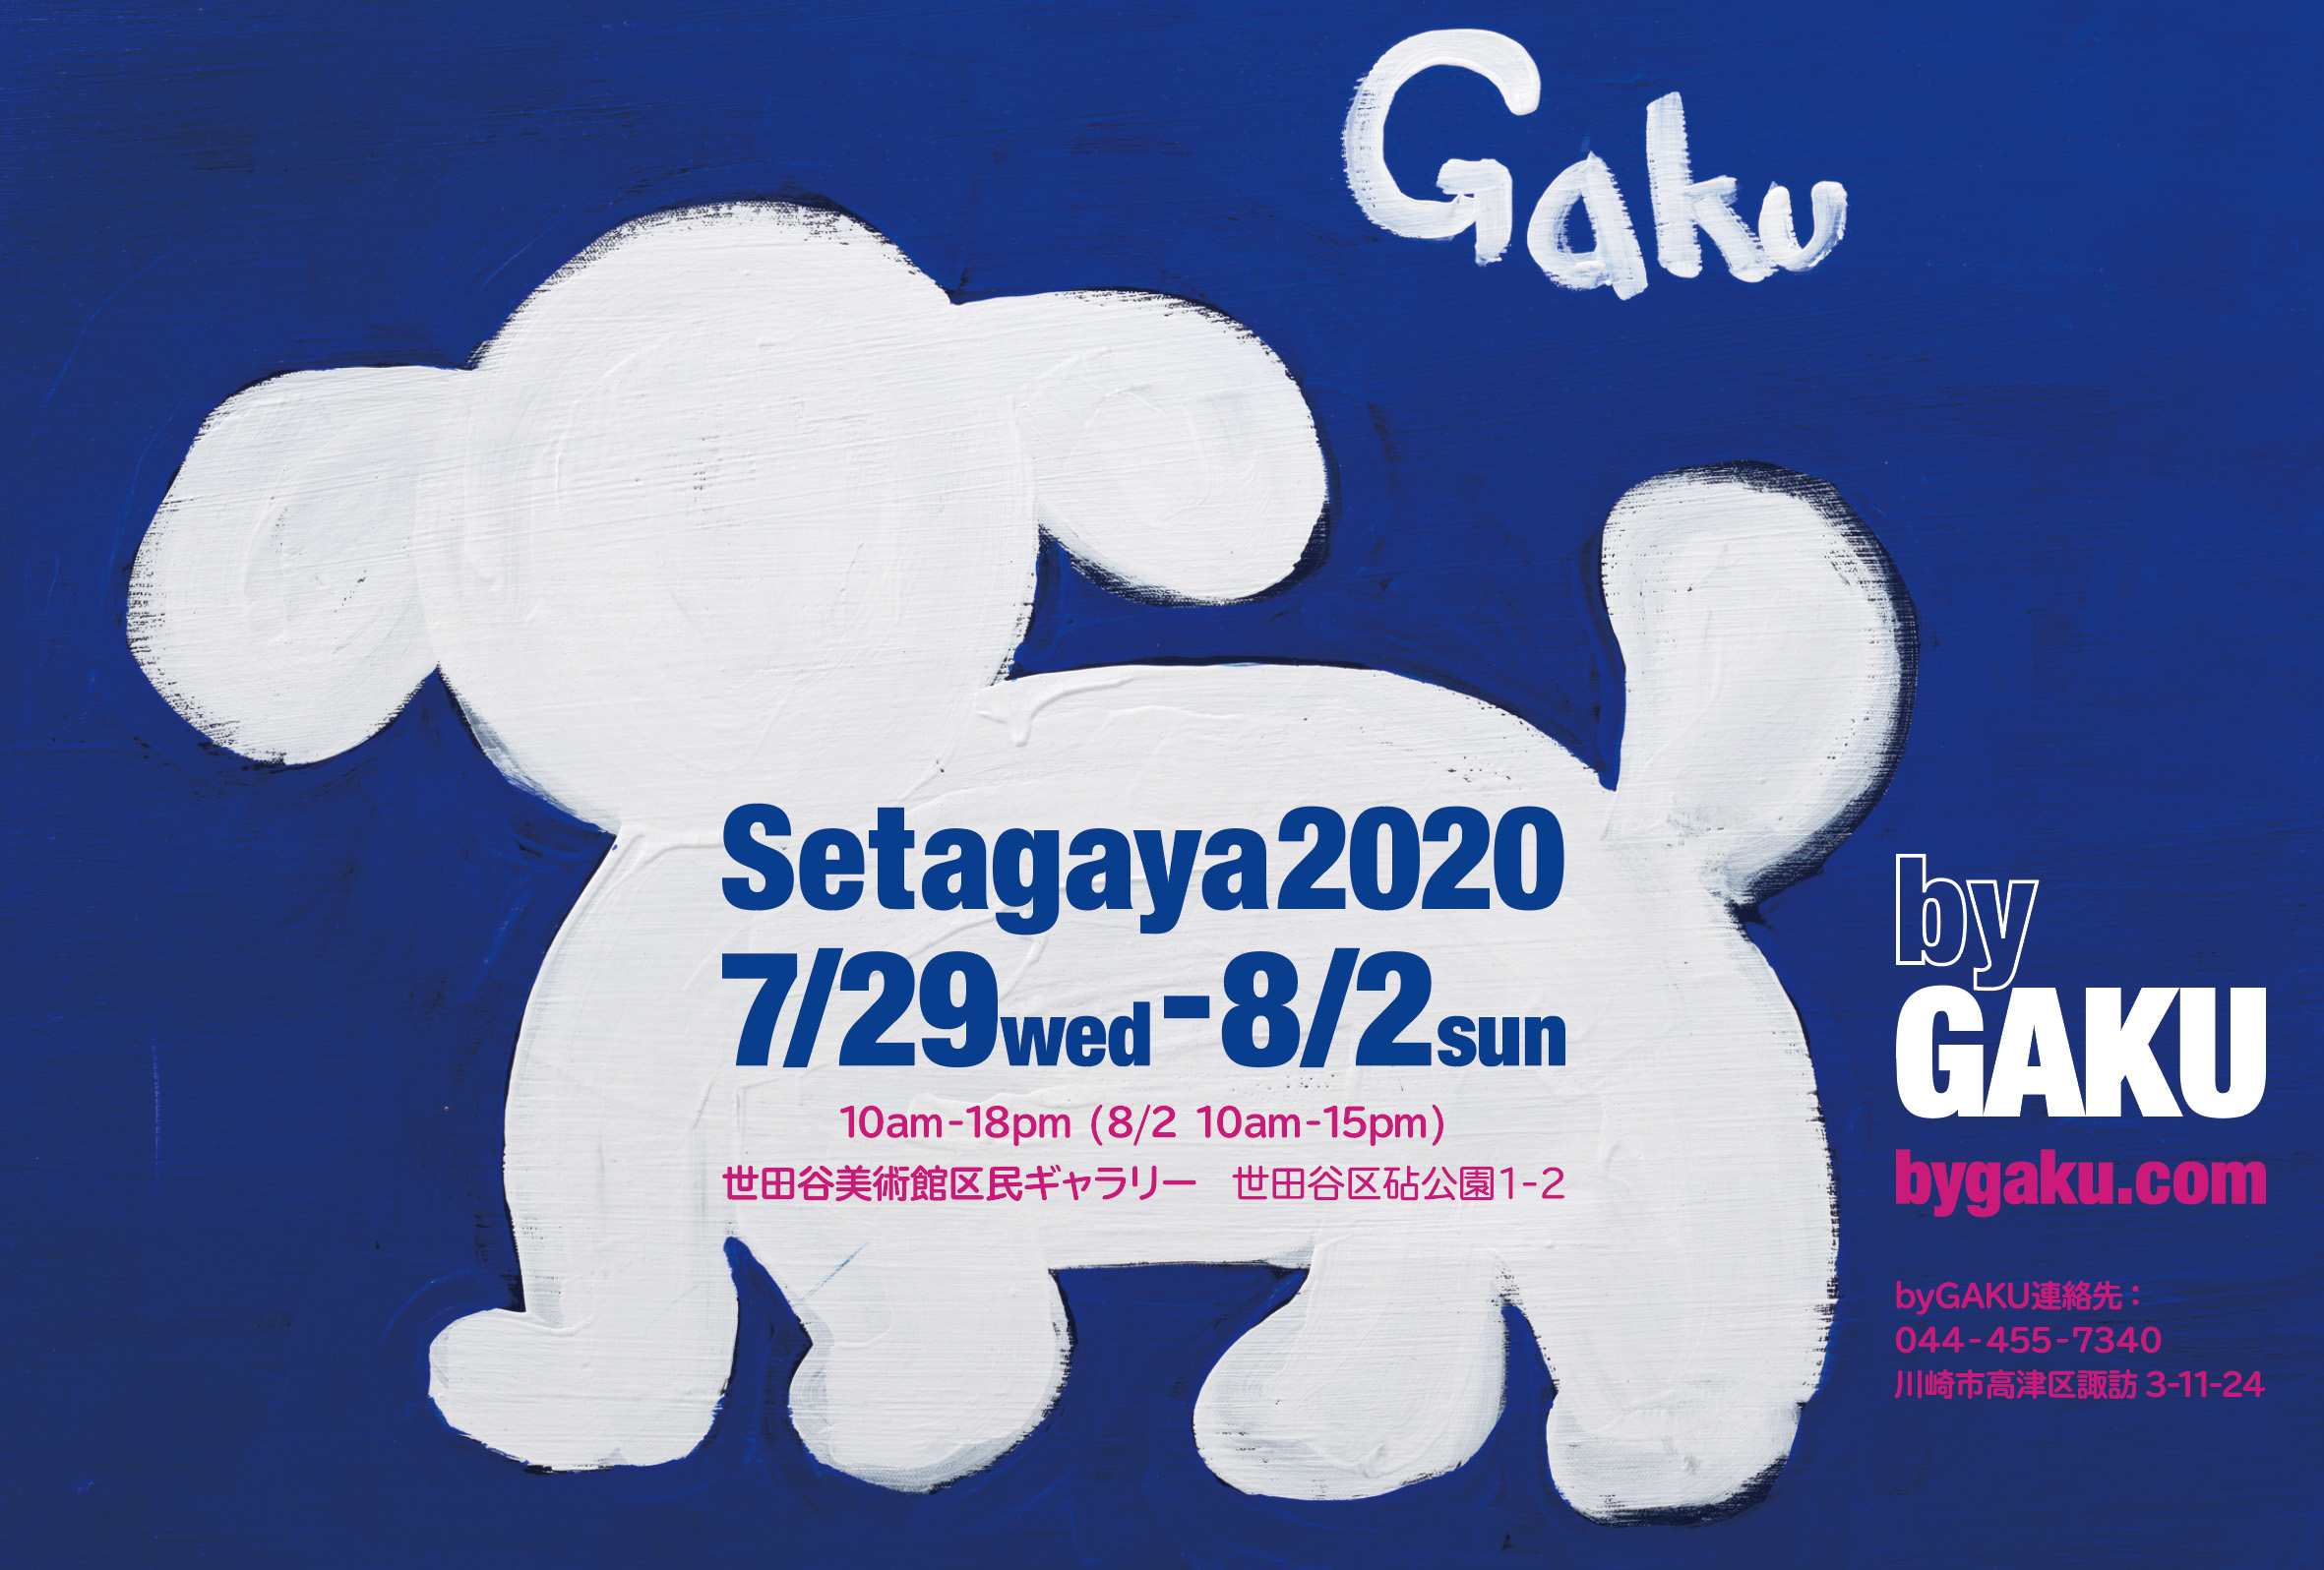 「SETAGAYA2020 byGAKU～19 歳の自閉症アーティスト GAKU 個展開催とバッグブランド LeSportsac とのコラボレーションについて決定